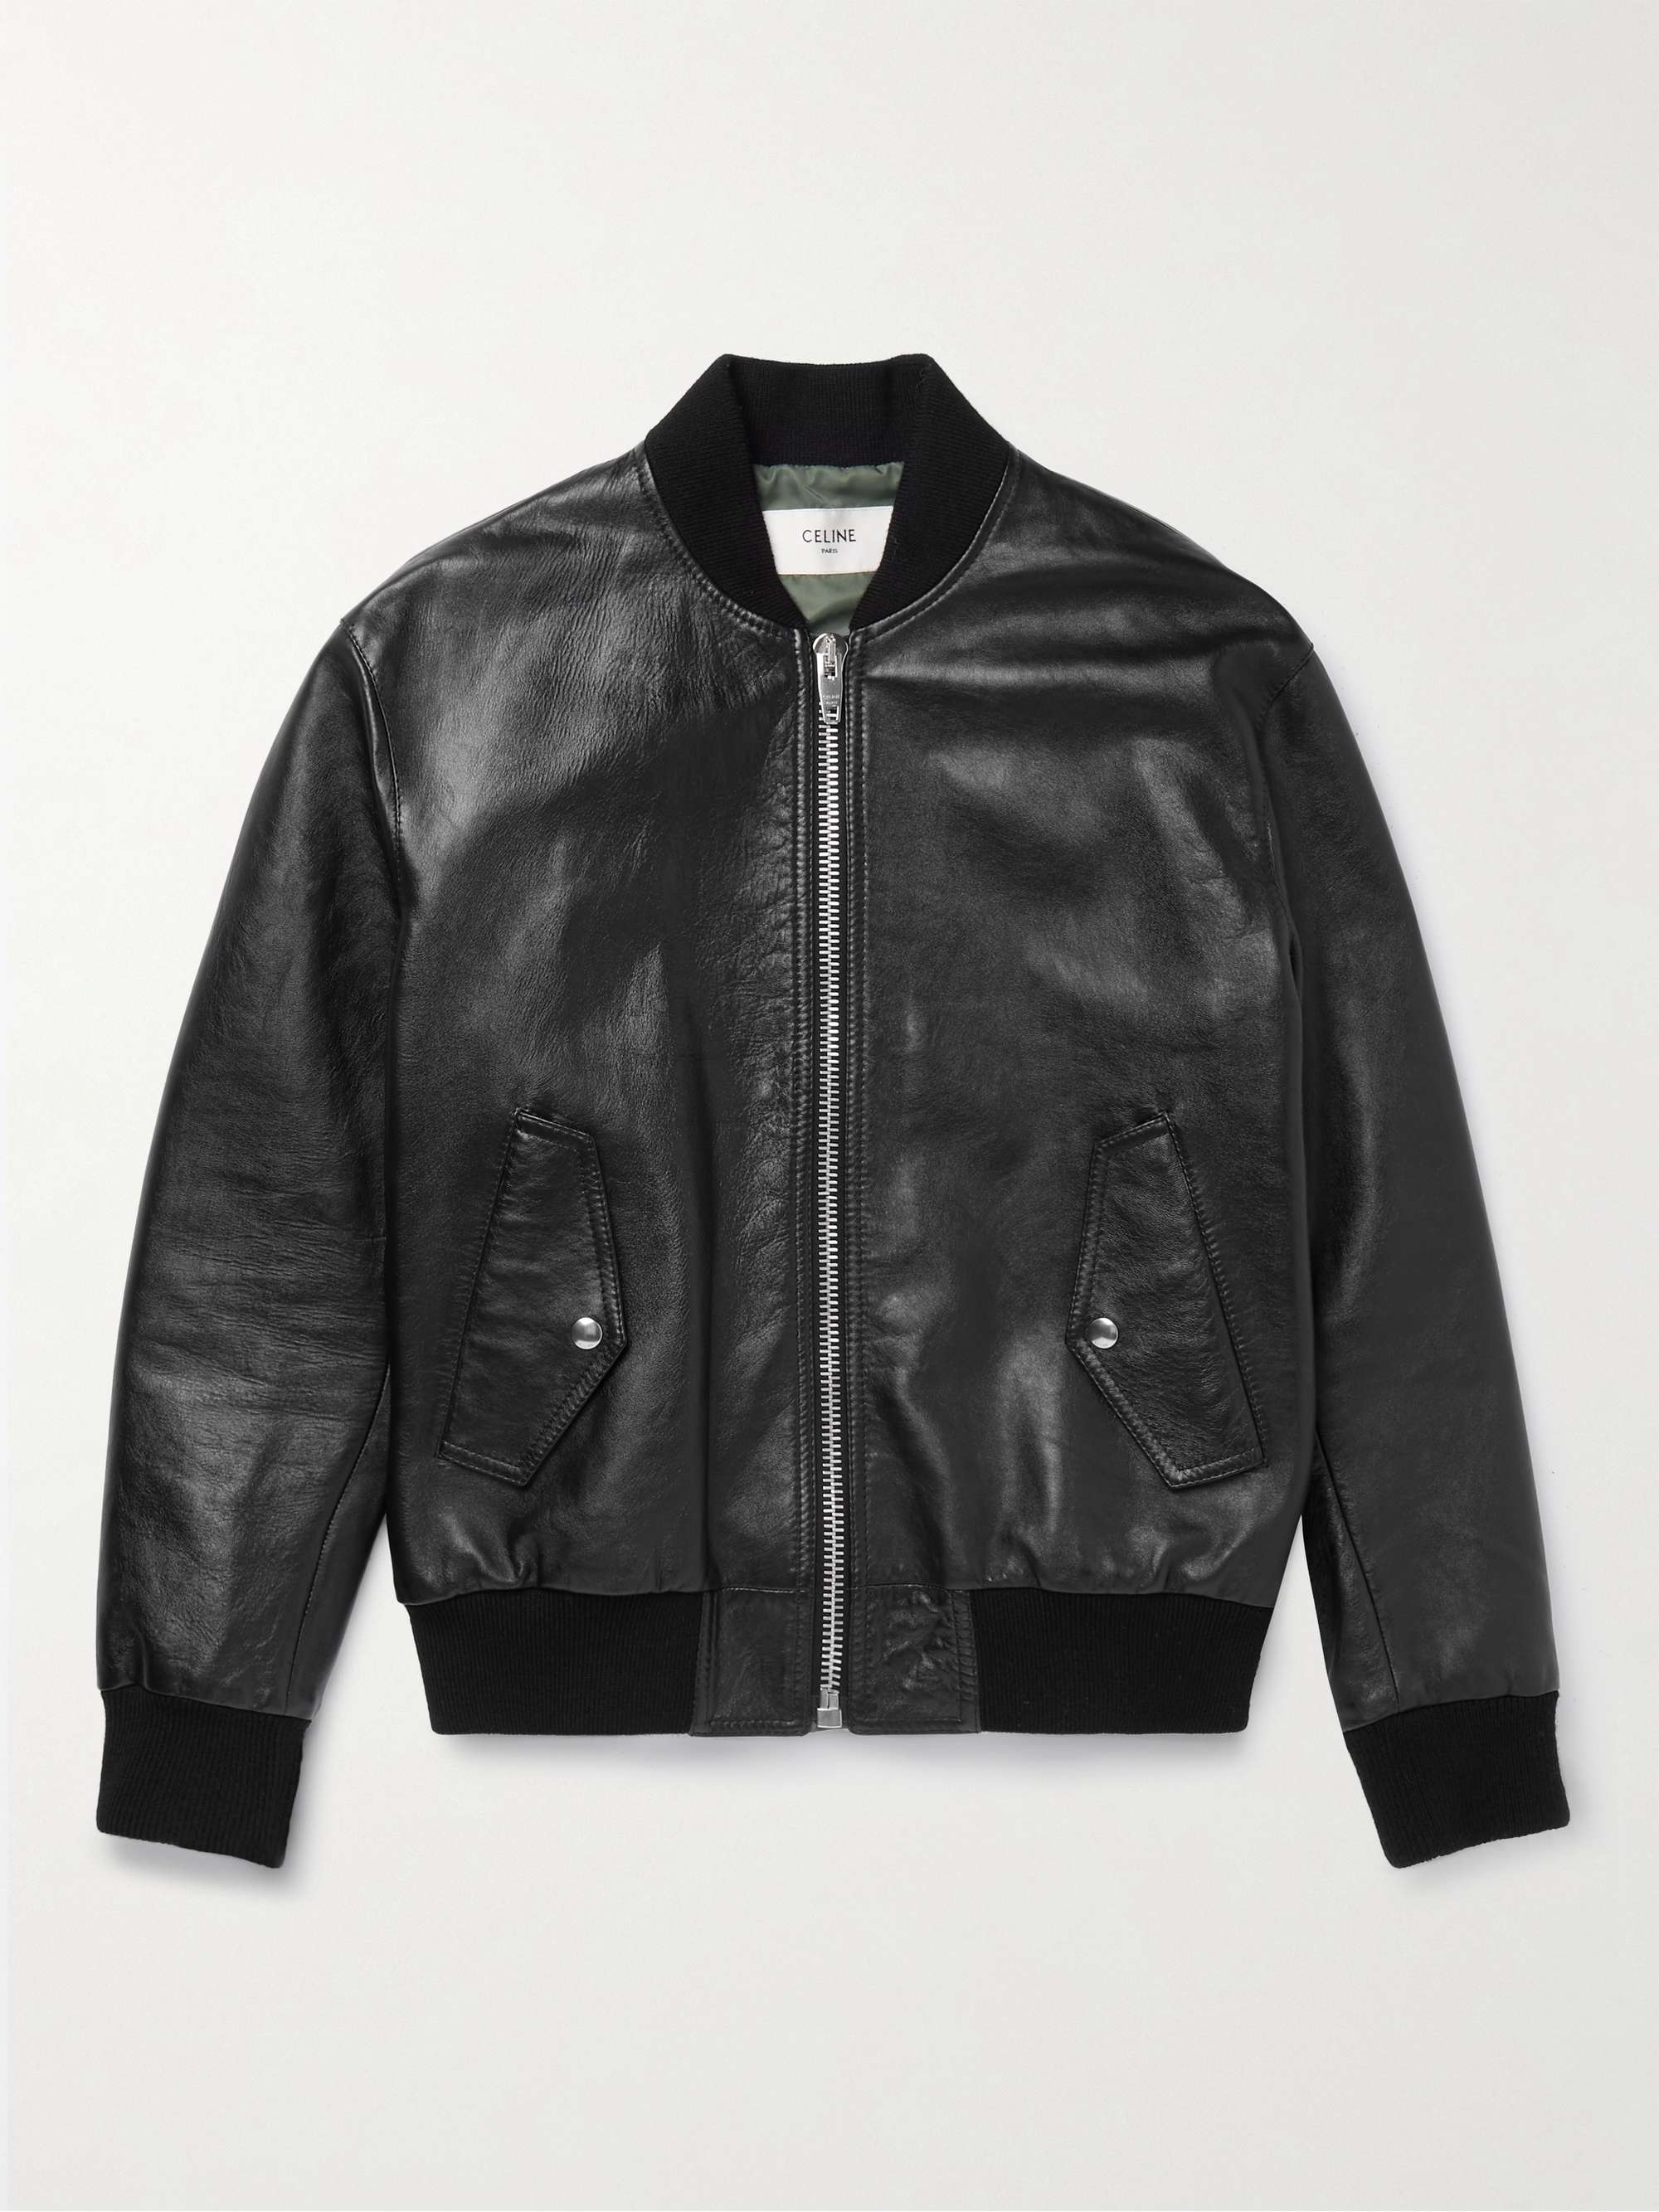 CELINE HOMME Logo-Embossed Leather Bomber Jacket for Men | MR PORTER